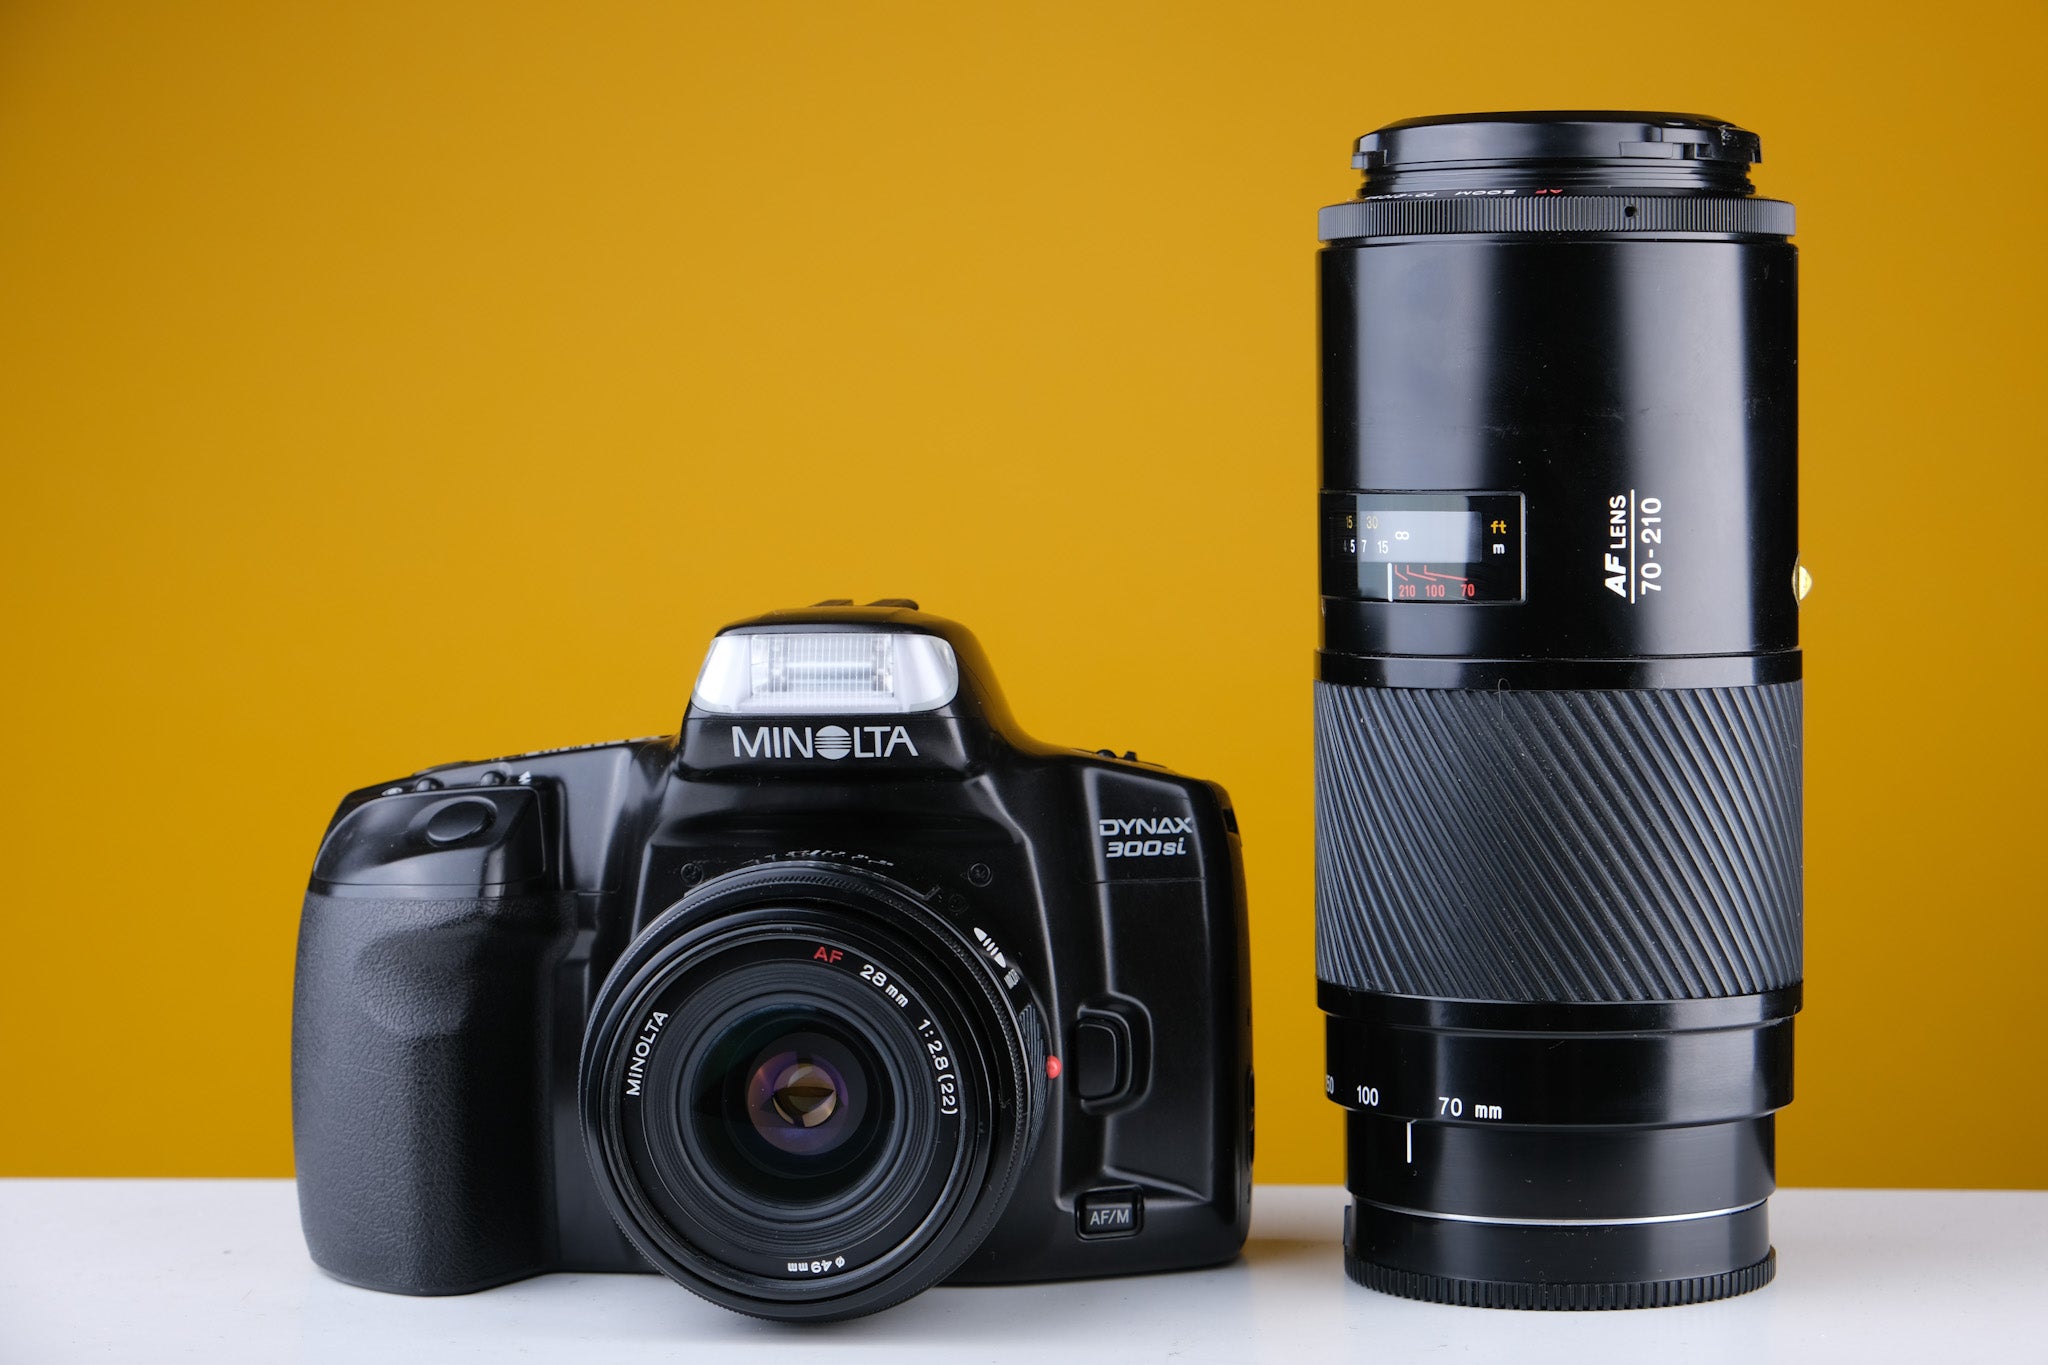 Minolta Dynax 300SI 35mm SLR Film Camera Kit with 28mm f2.8 and 70-210 f4 Lens